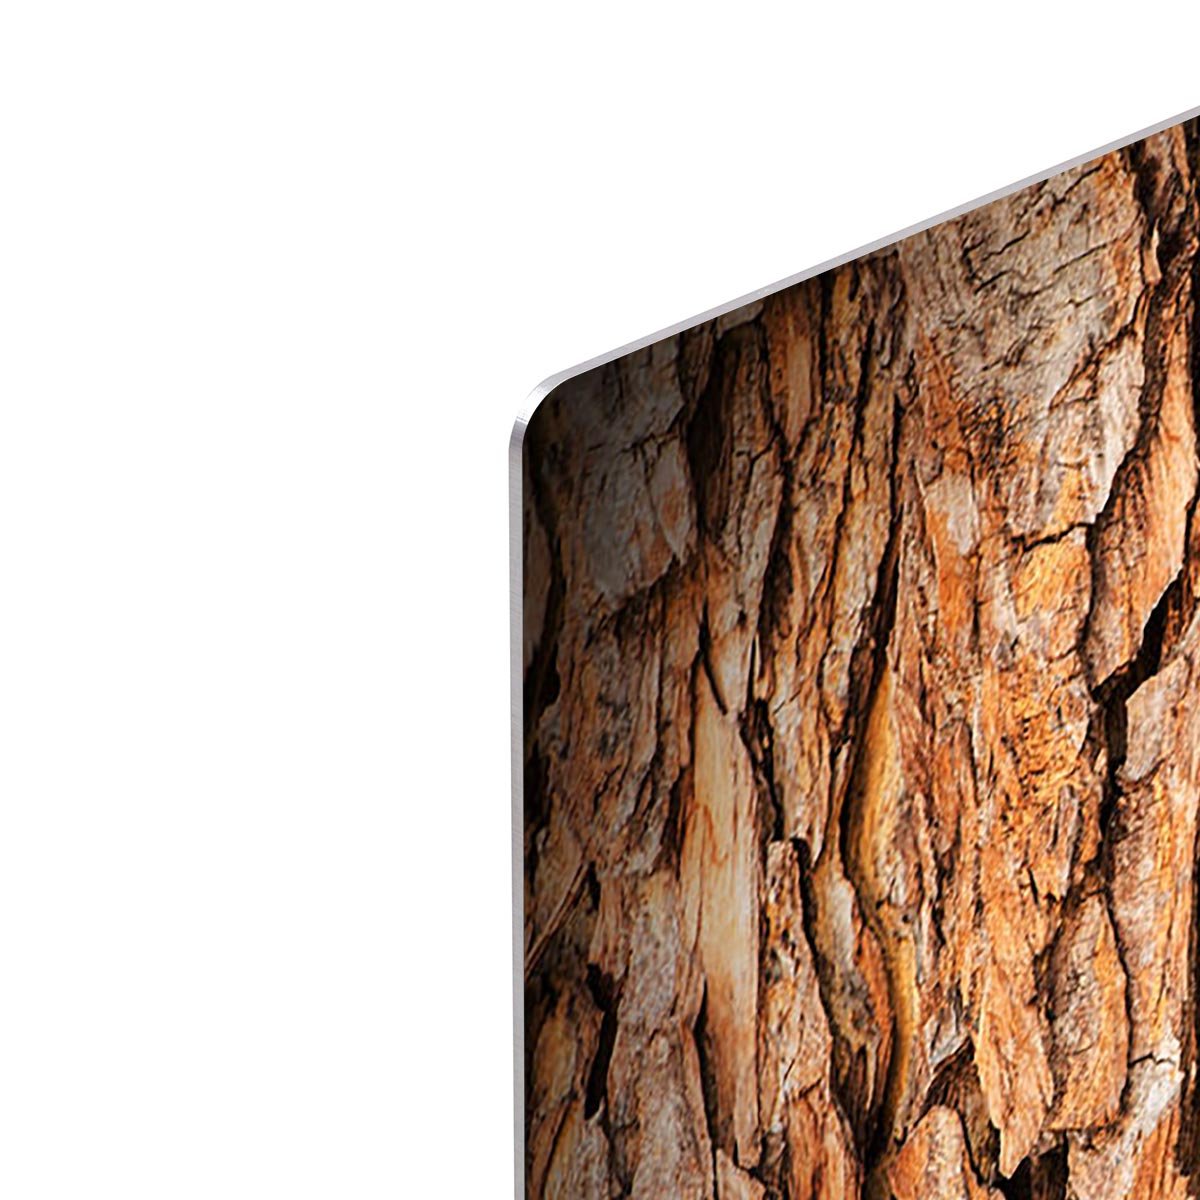 Bark texture HD Metal Print - Canvas Art Rocks - 4